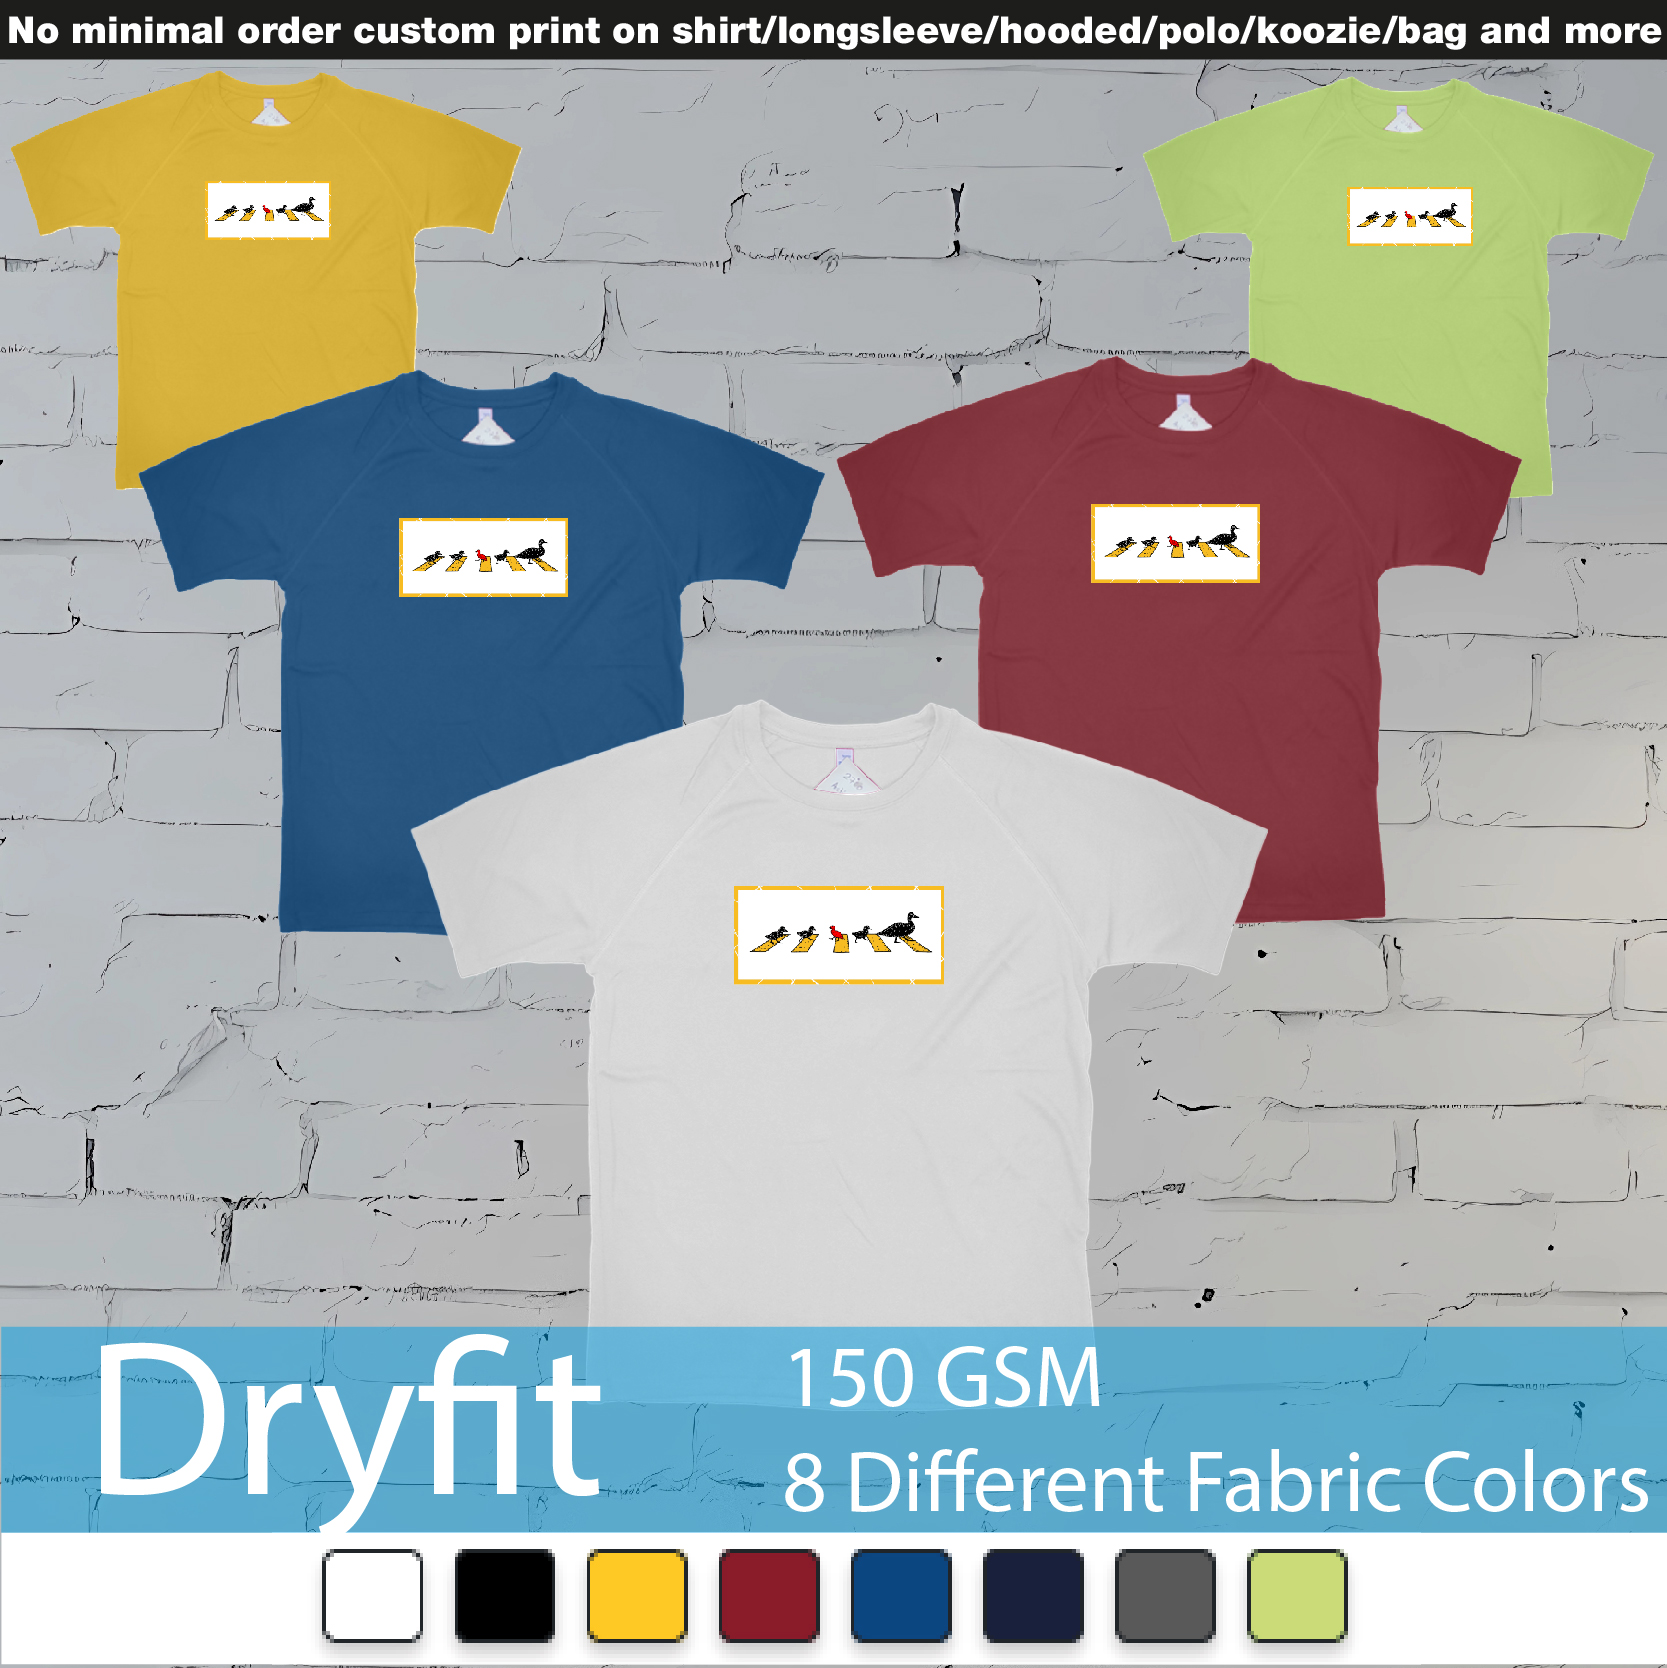 Утки Dryfit Tshirts Samples On Demand Printing Bali